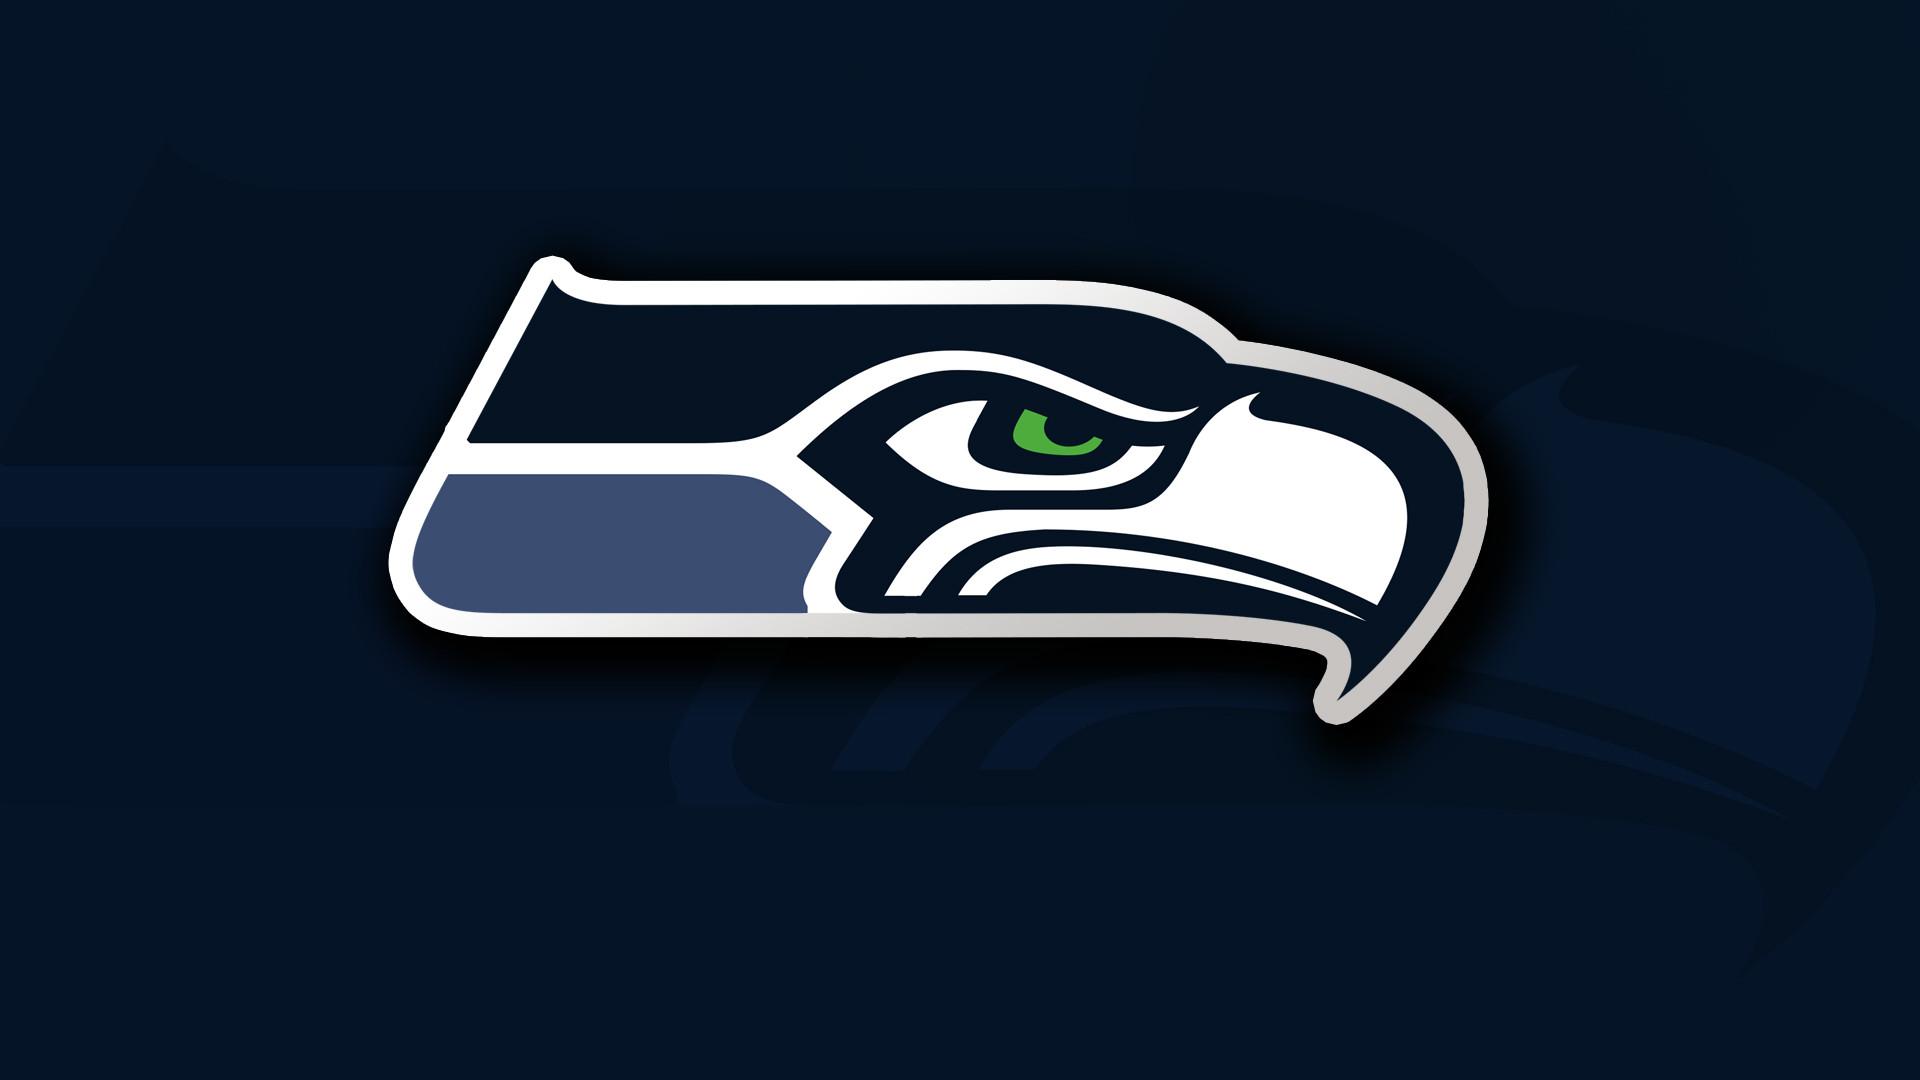 Seahawks Logo Wallpaper Pics